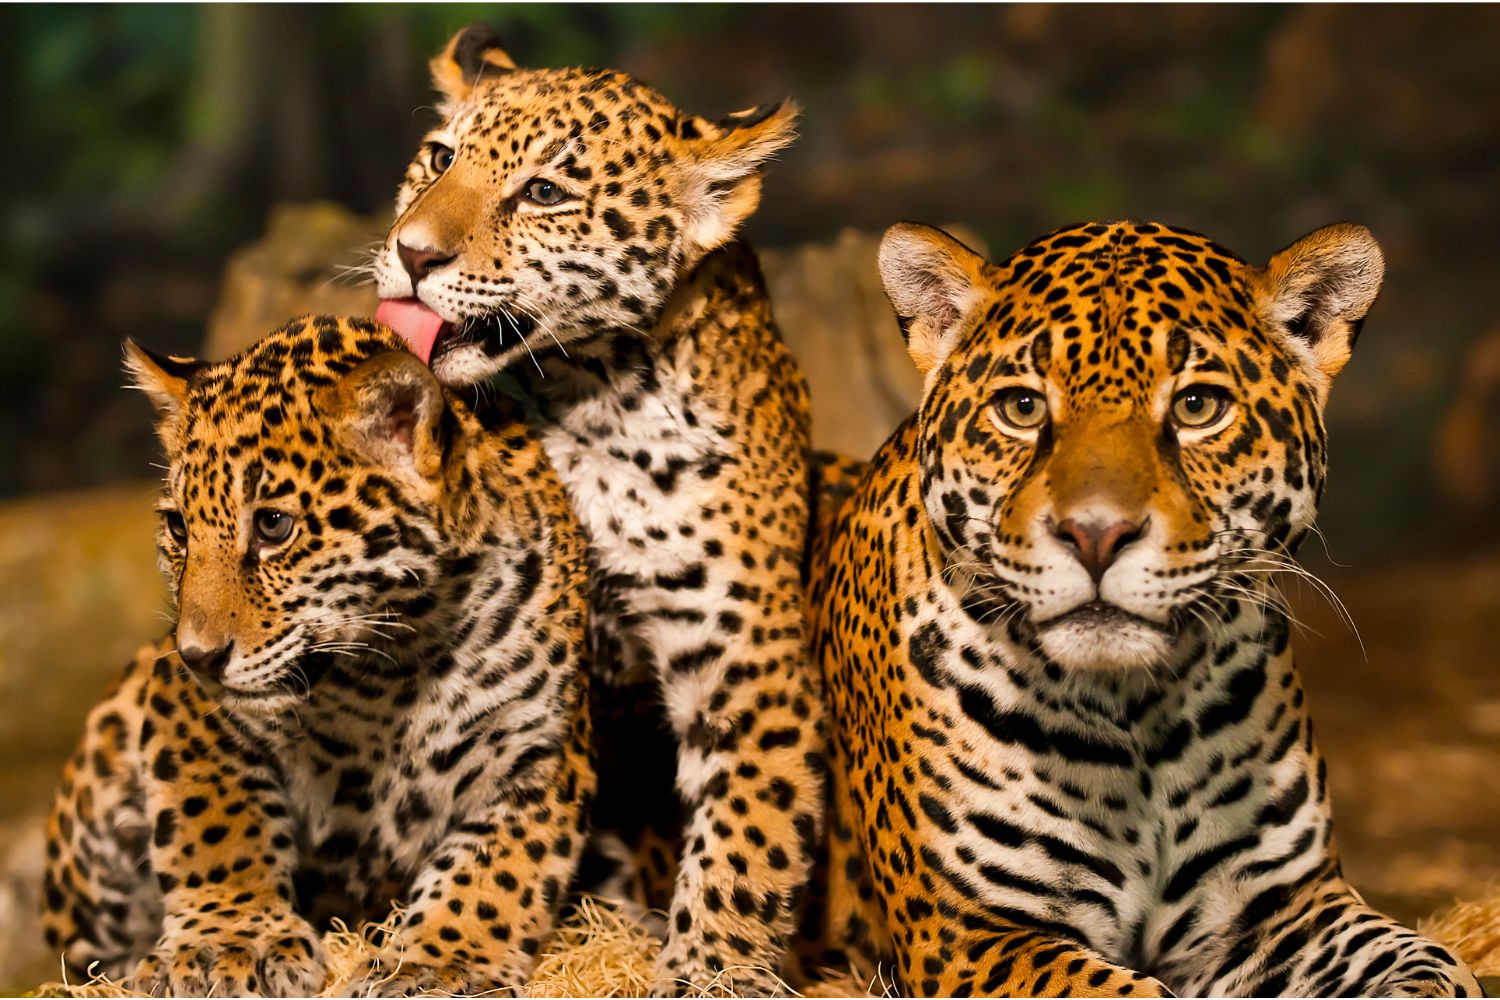 2. Jaguar cubs.